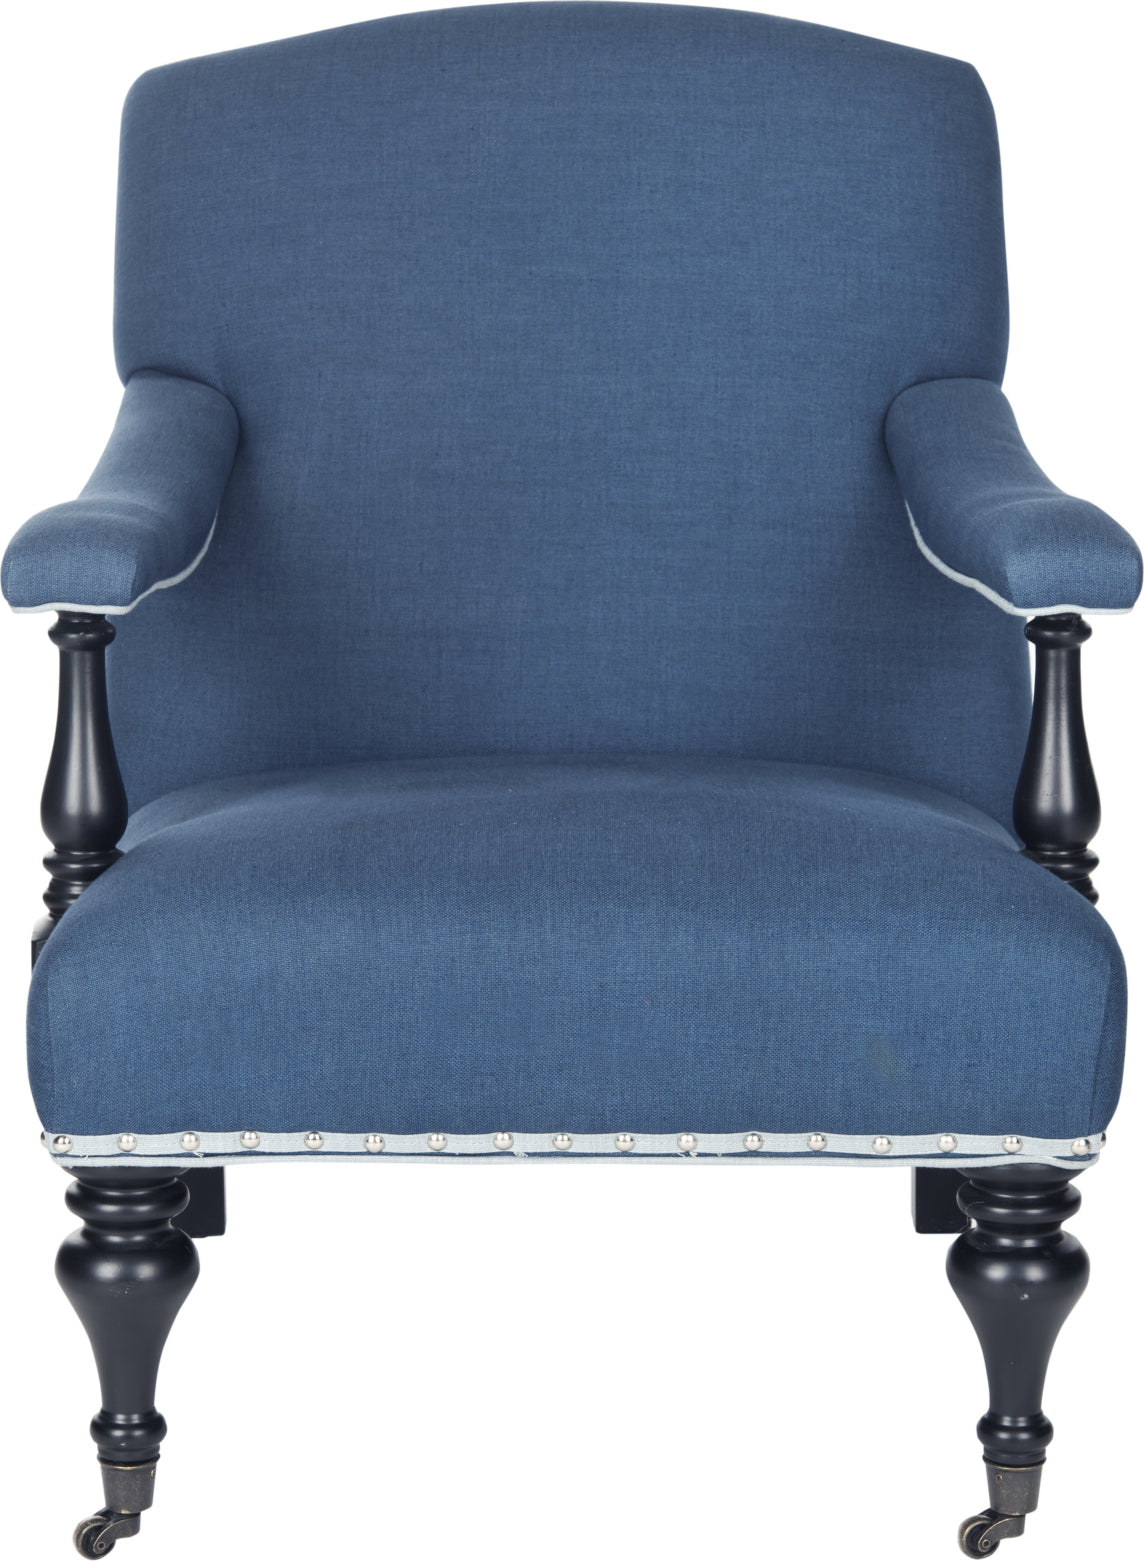 Safavieh Devona Arm Chair-Silver Nail Heads Steel Blue and Black Furniture main image